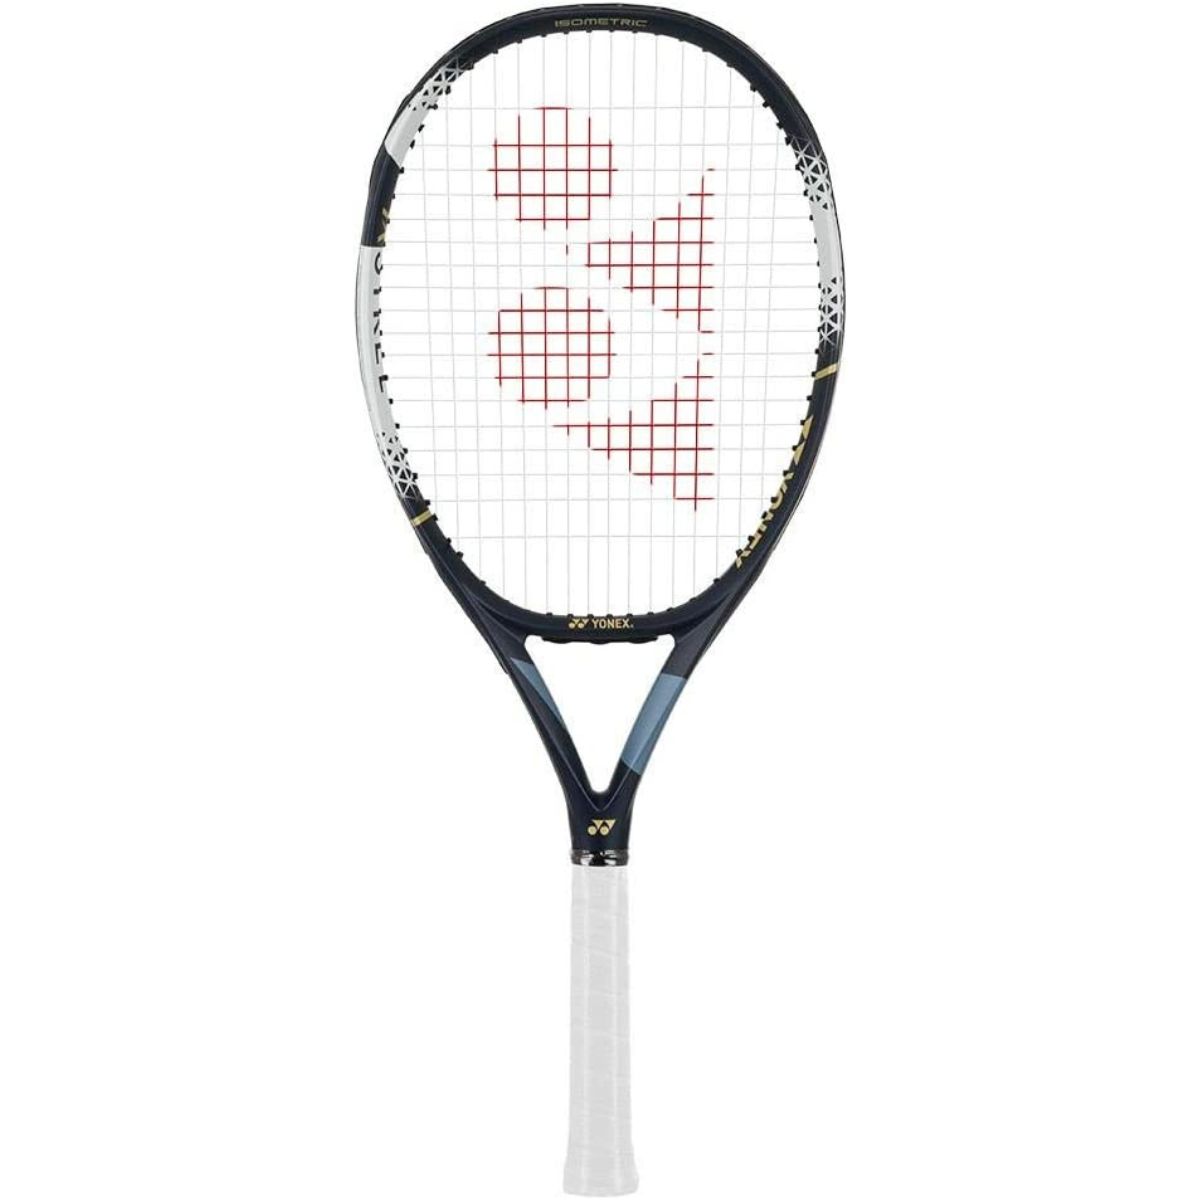 The Best Yonex Tennis Rackets Options: Yonex Astrel 105